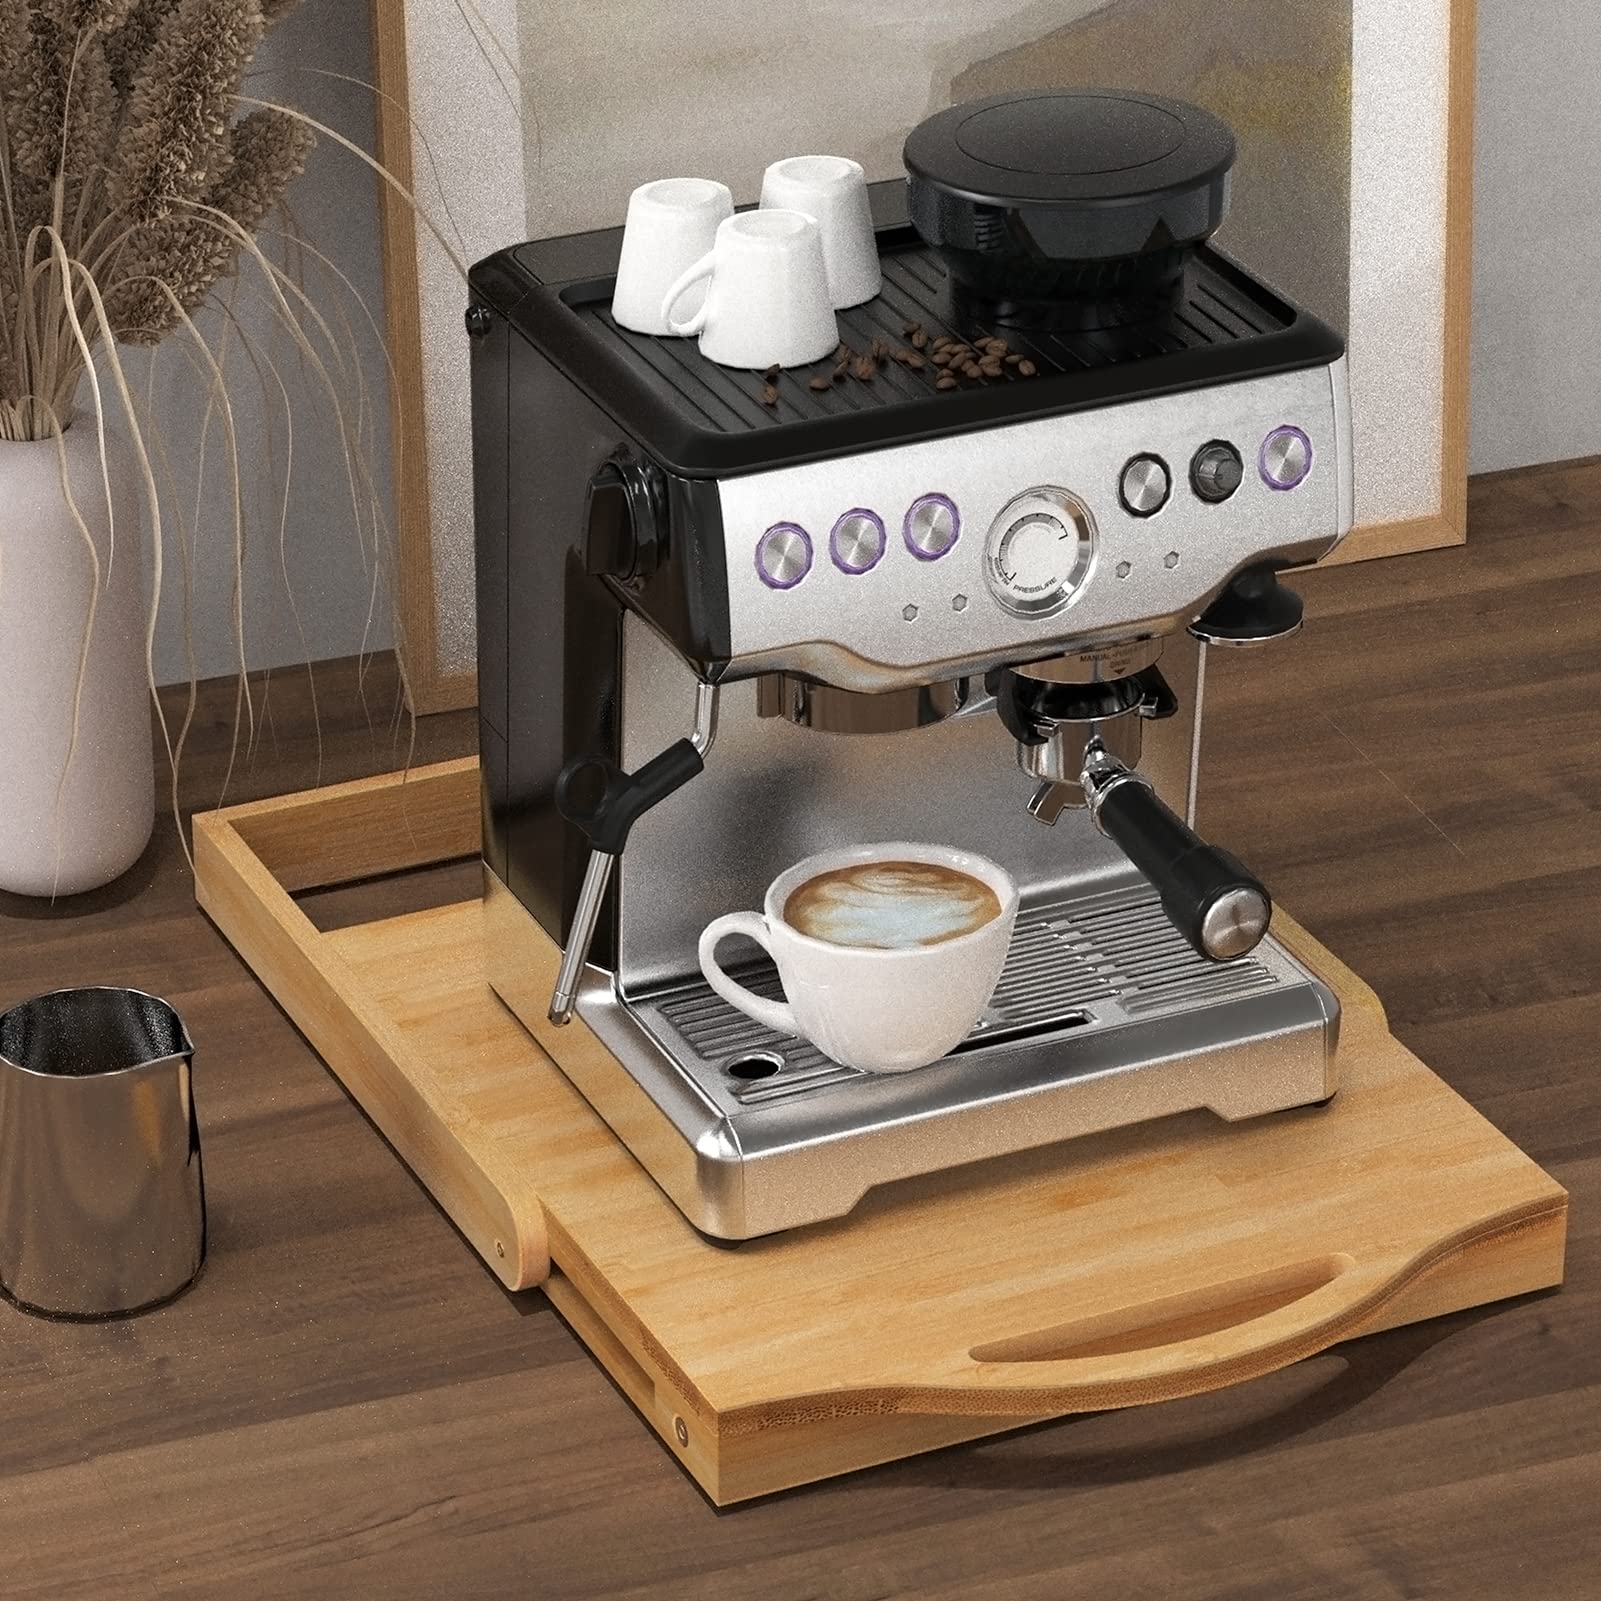 Coffee Pot Caddy Under Counter Appliance Slider for Blender Toaster Etc.